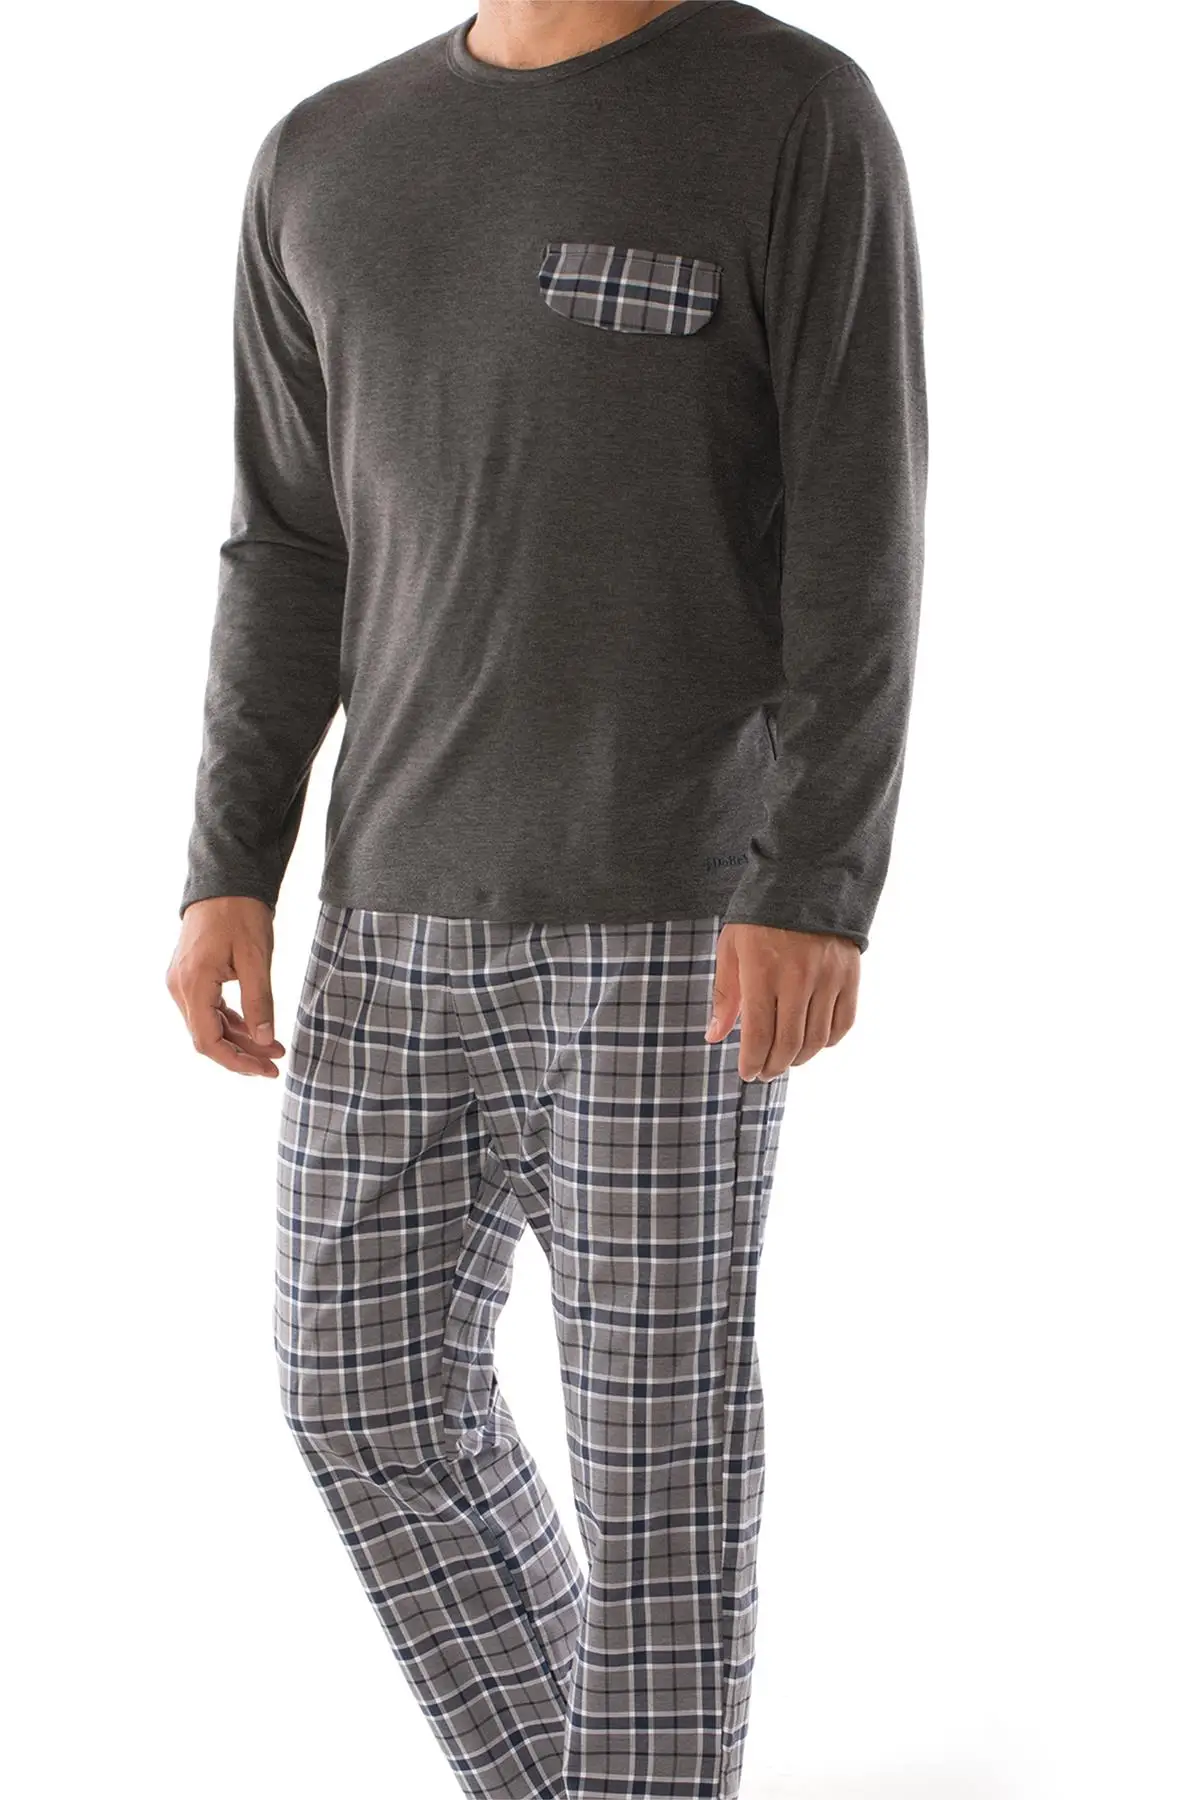 Men Pajama Set Soft Comfortable Spring Autumn Winter Long Sleeve Pants Home Wear Plus Size Cotton pajamas